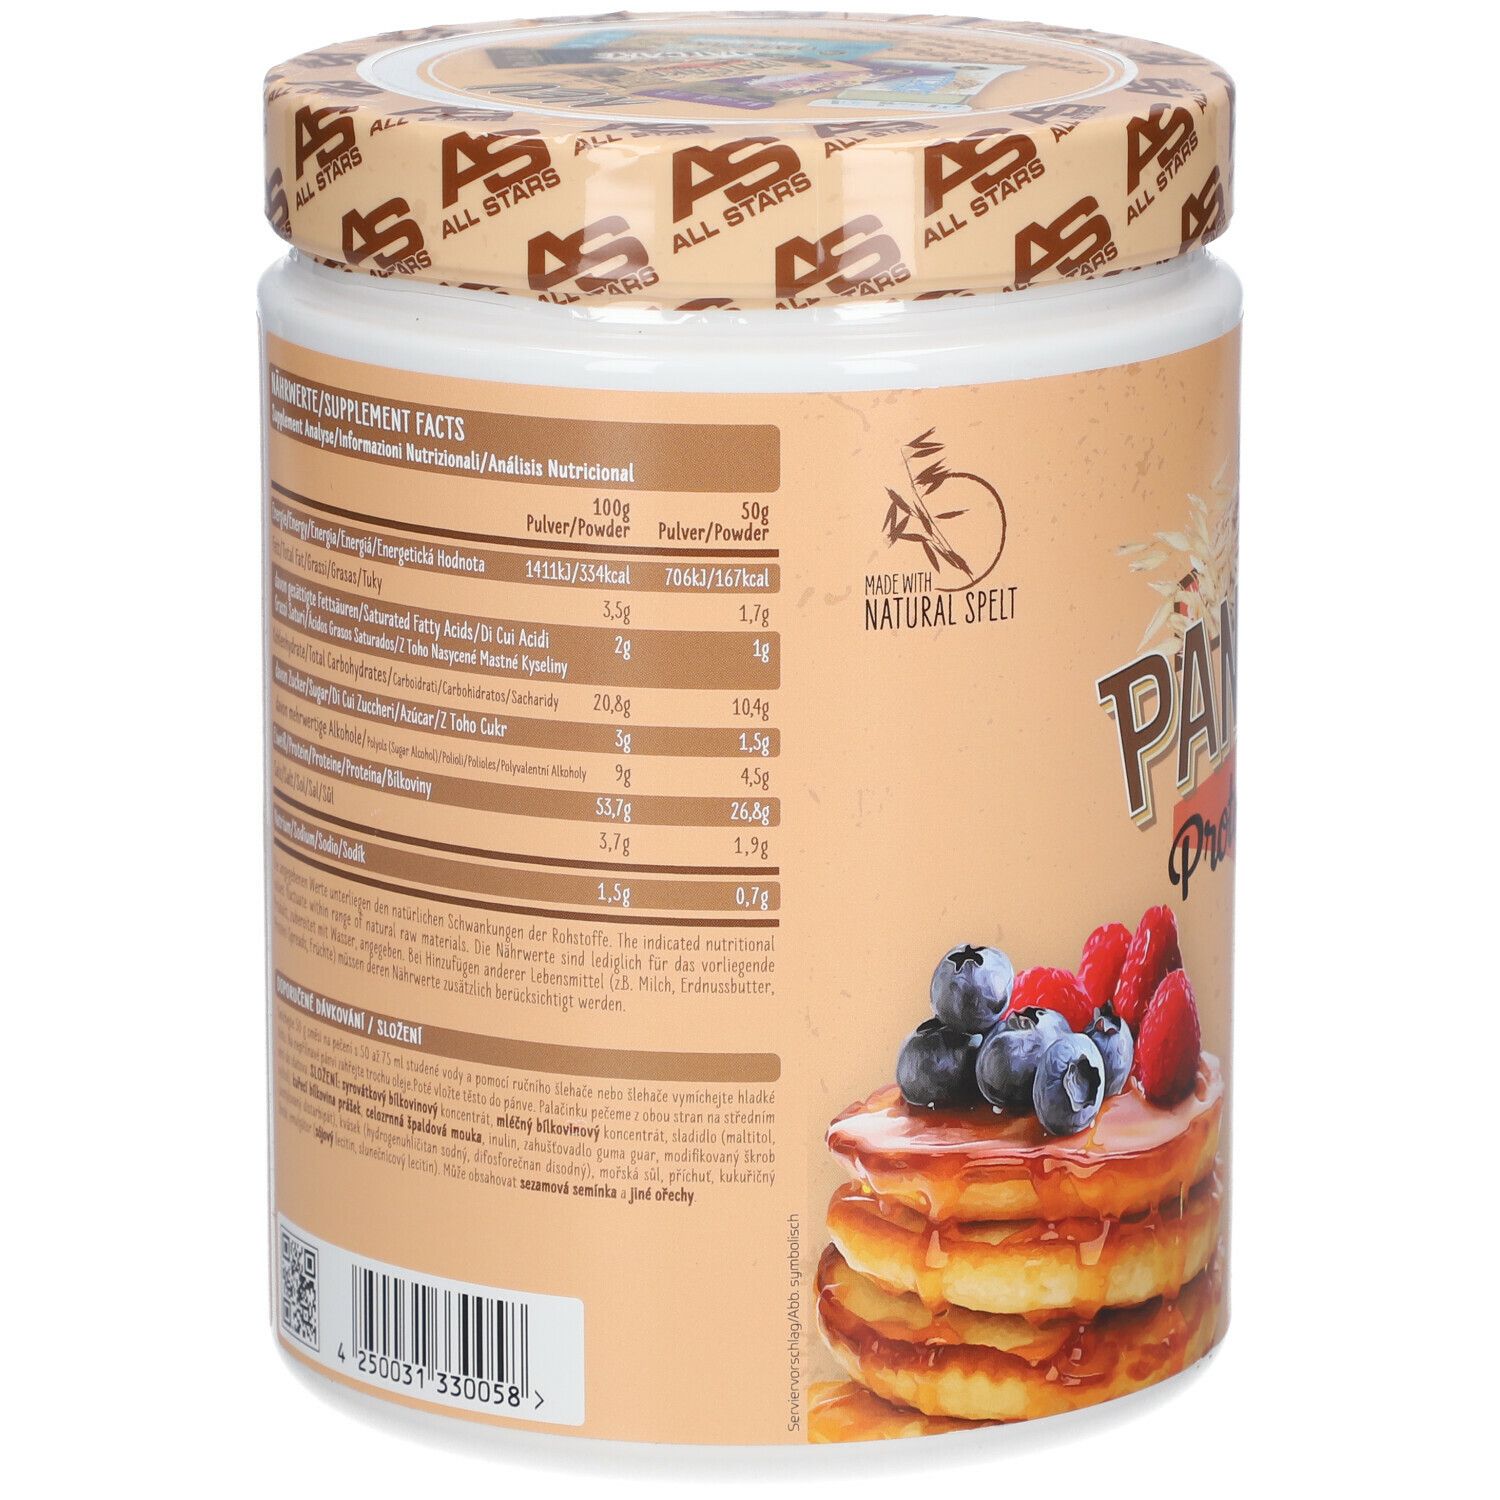 All Stars® Pancake Protein Mix